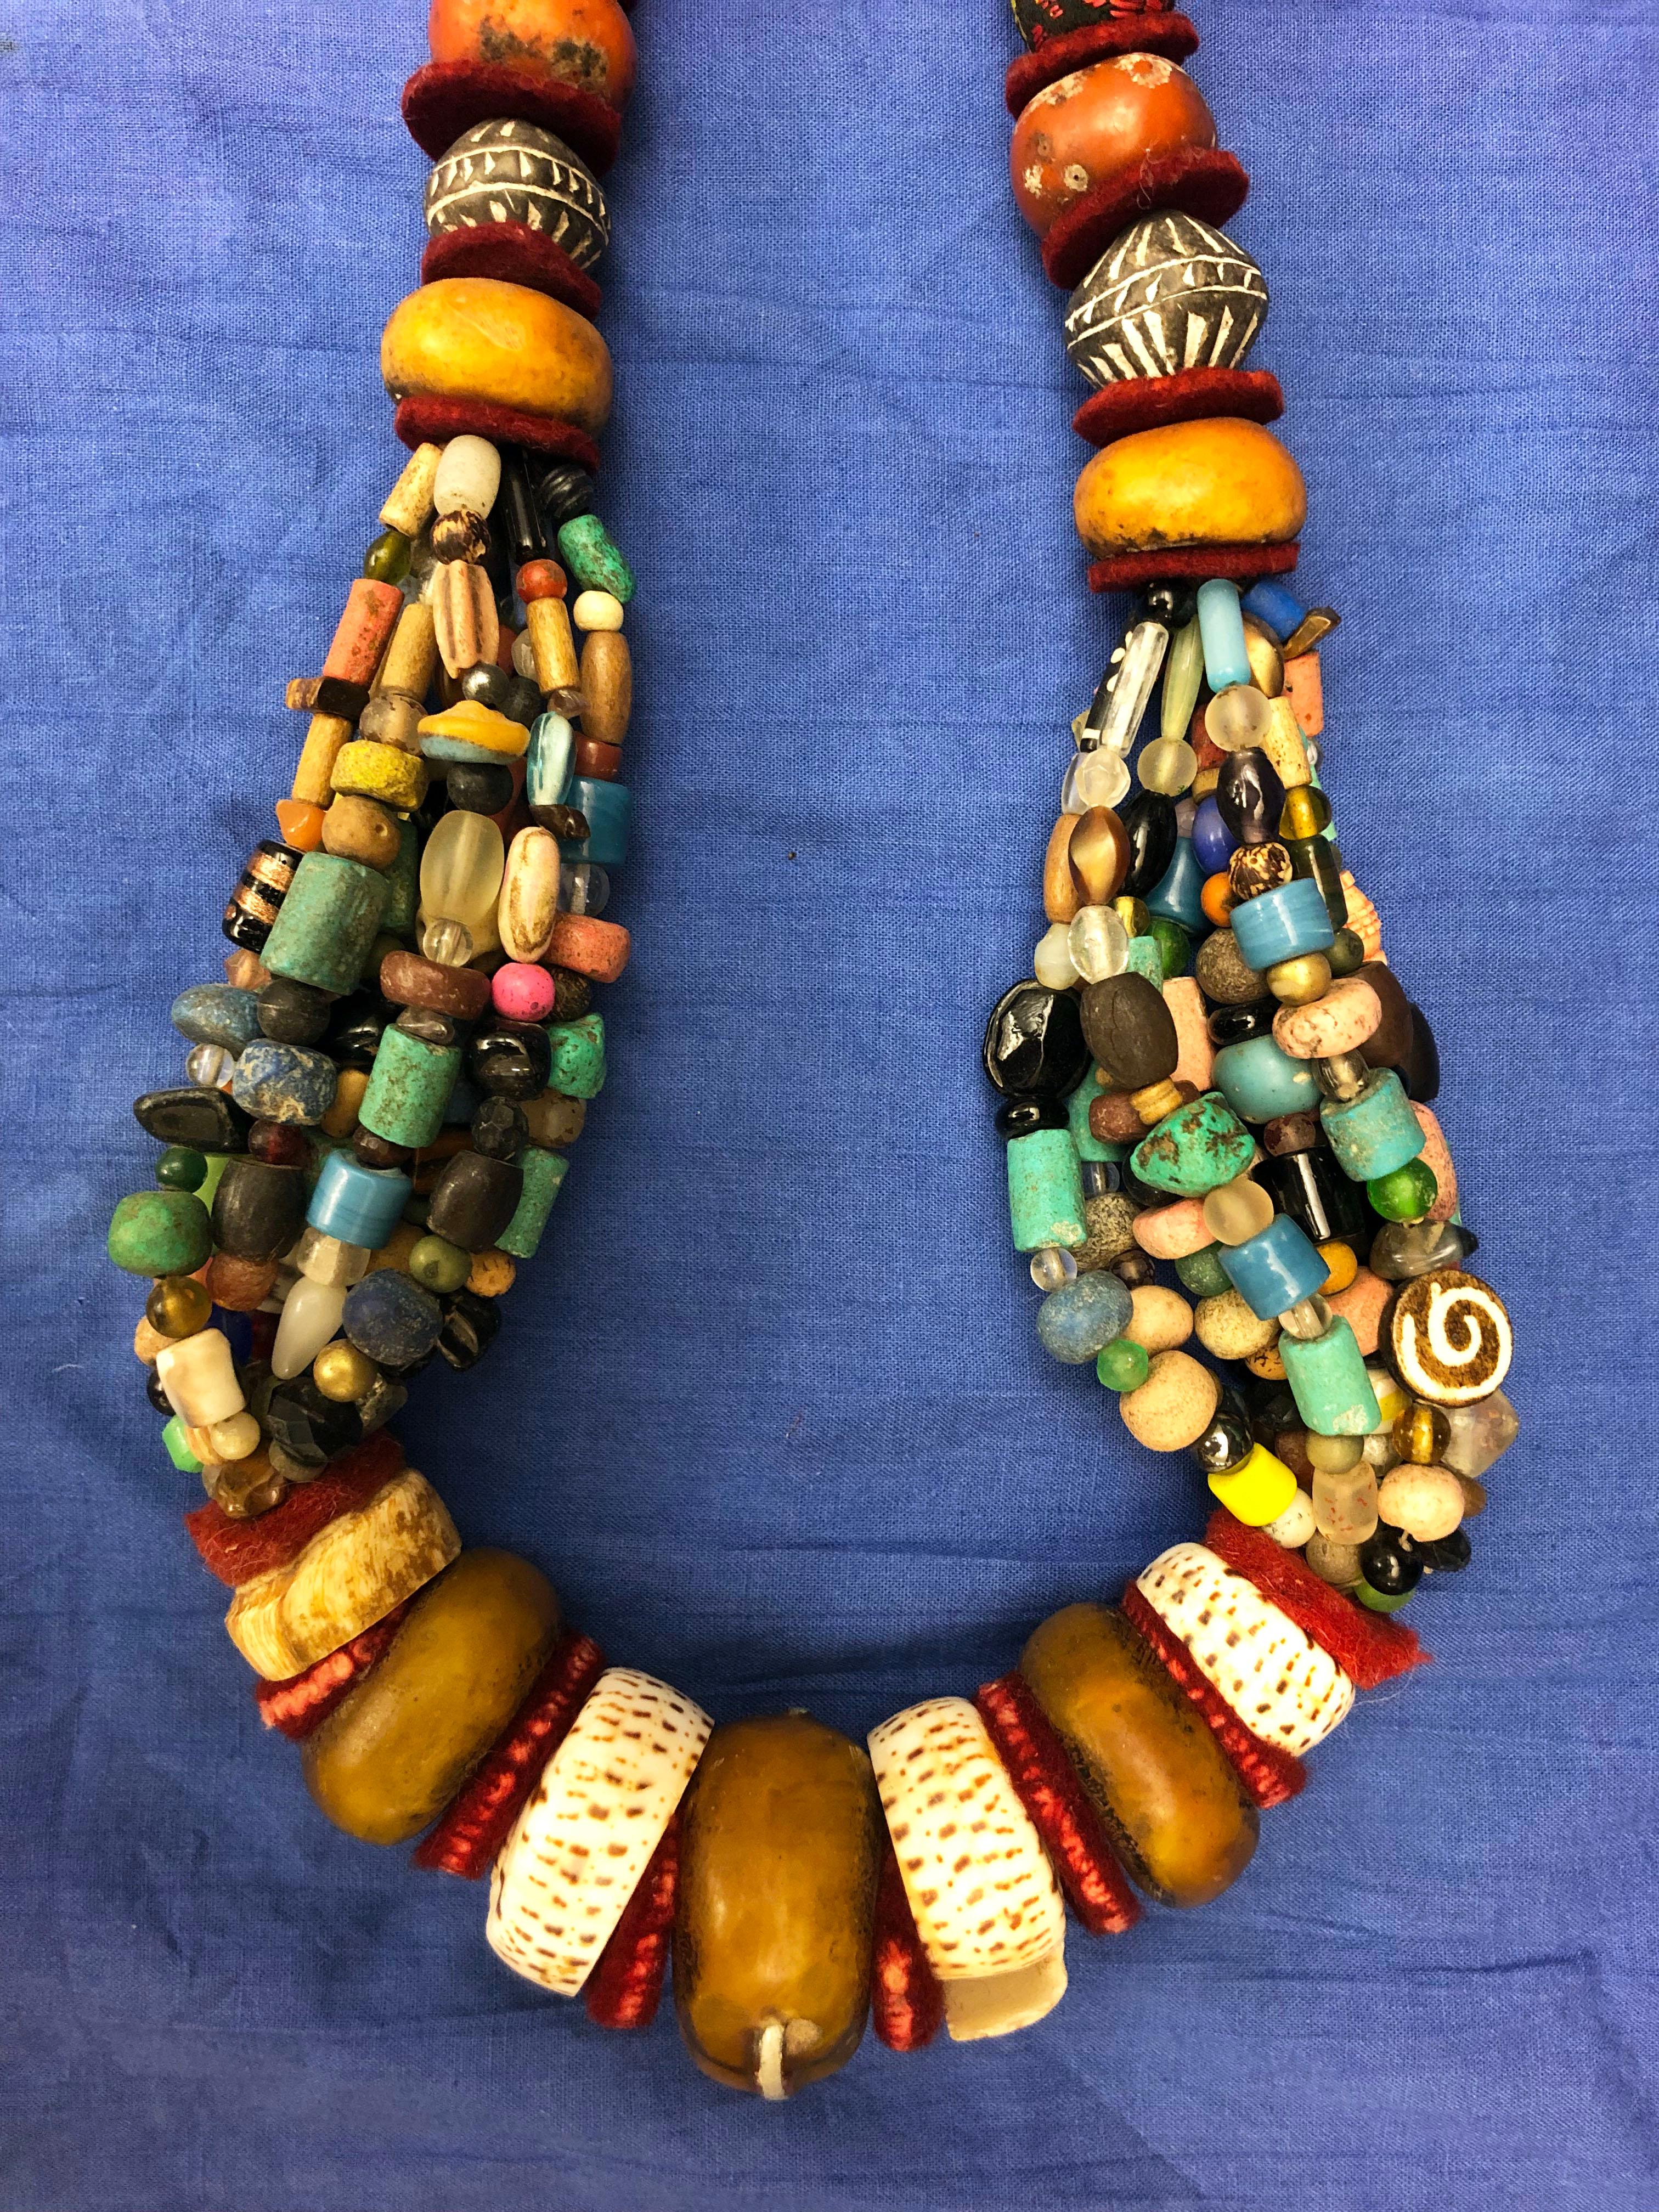 2 Berber Amber Necklace Moroccan Ethnic African Tribal Beads Handmade Jewlery 2 